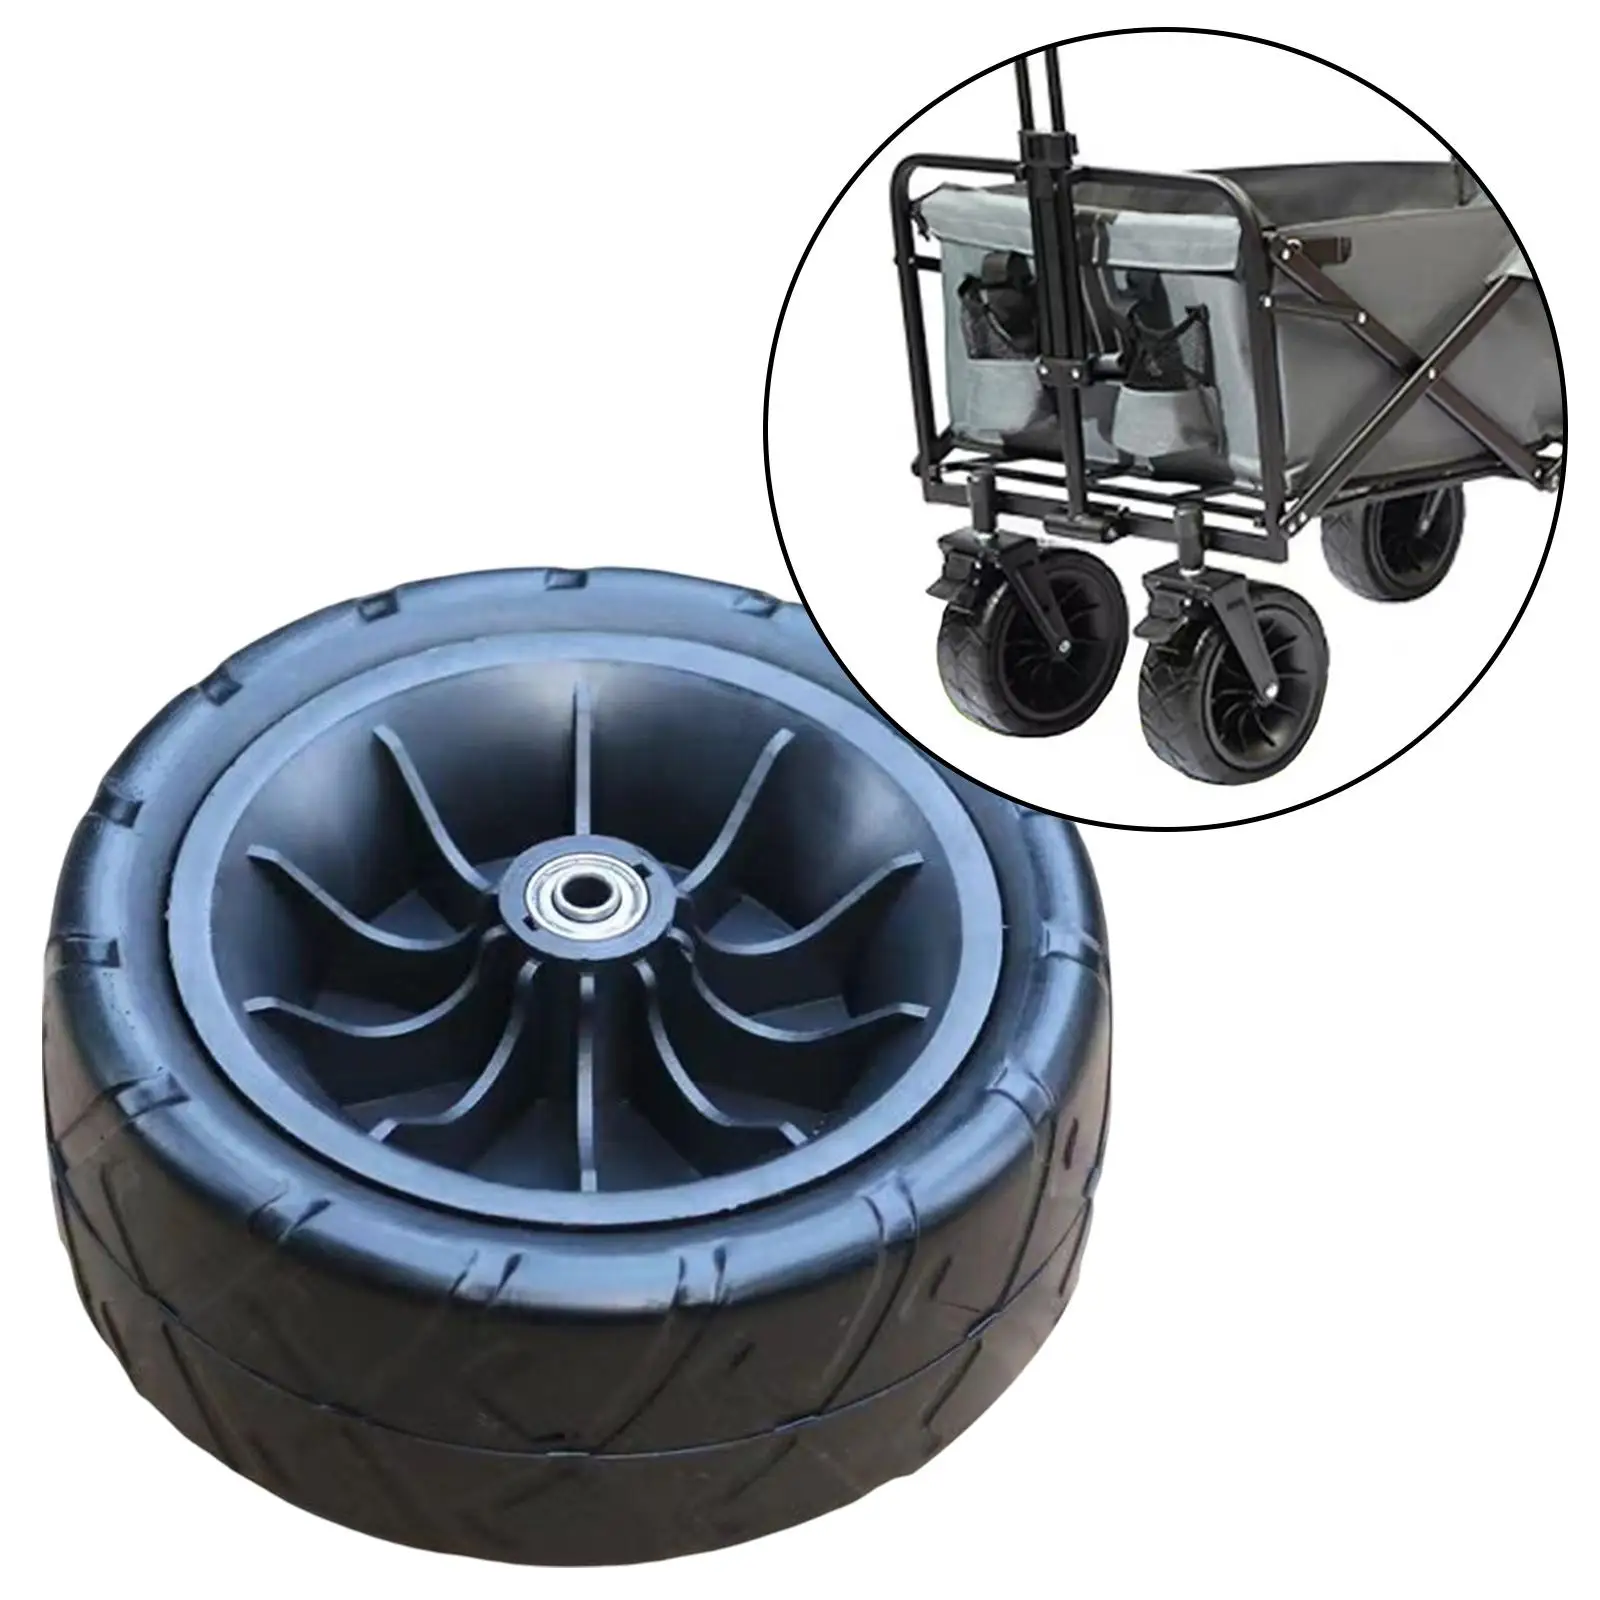 20cm Replacement Wheel for Wagon Garden Cart Shopping Trolley Attachment